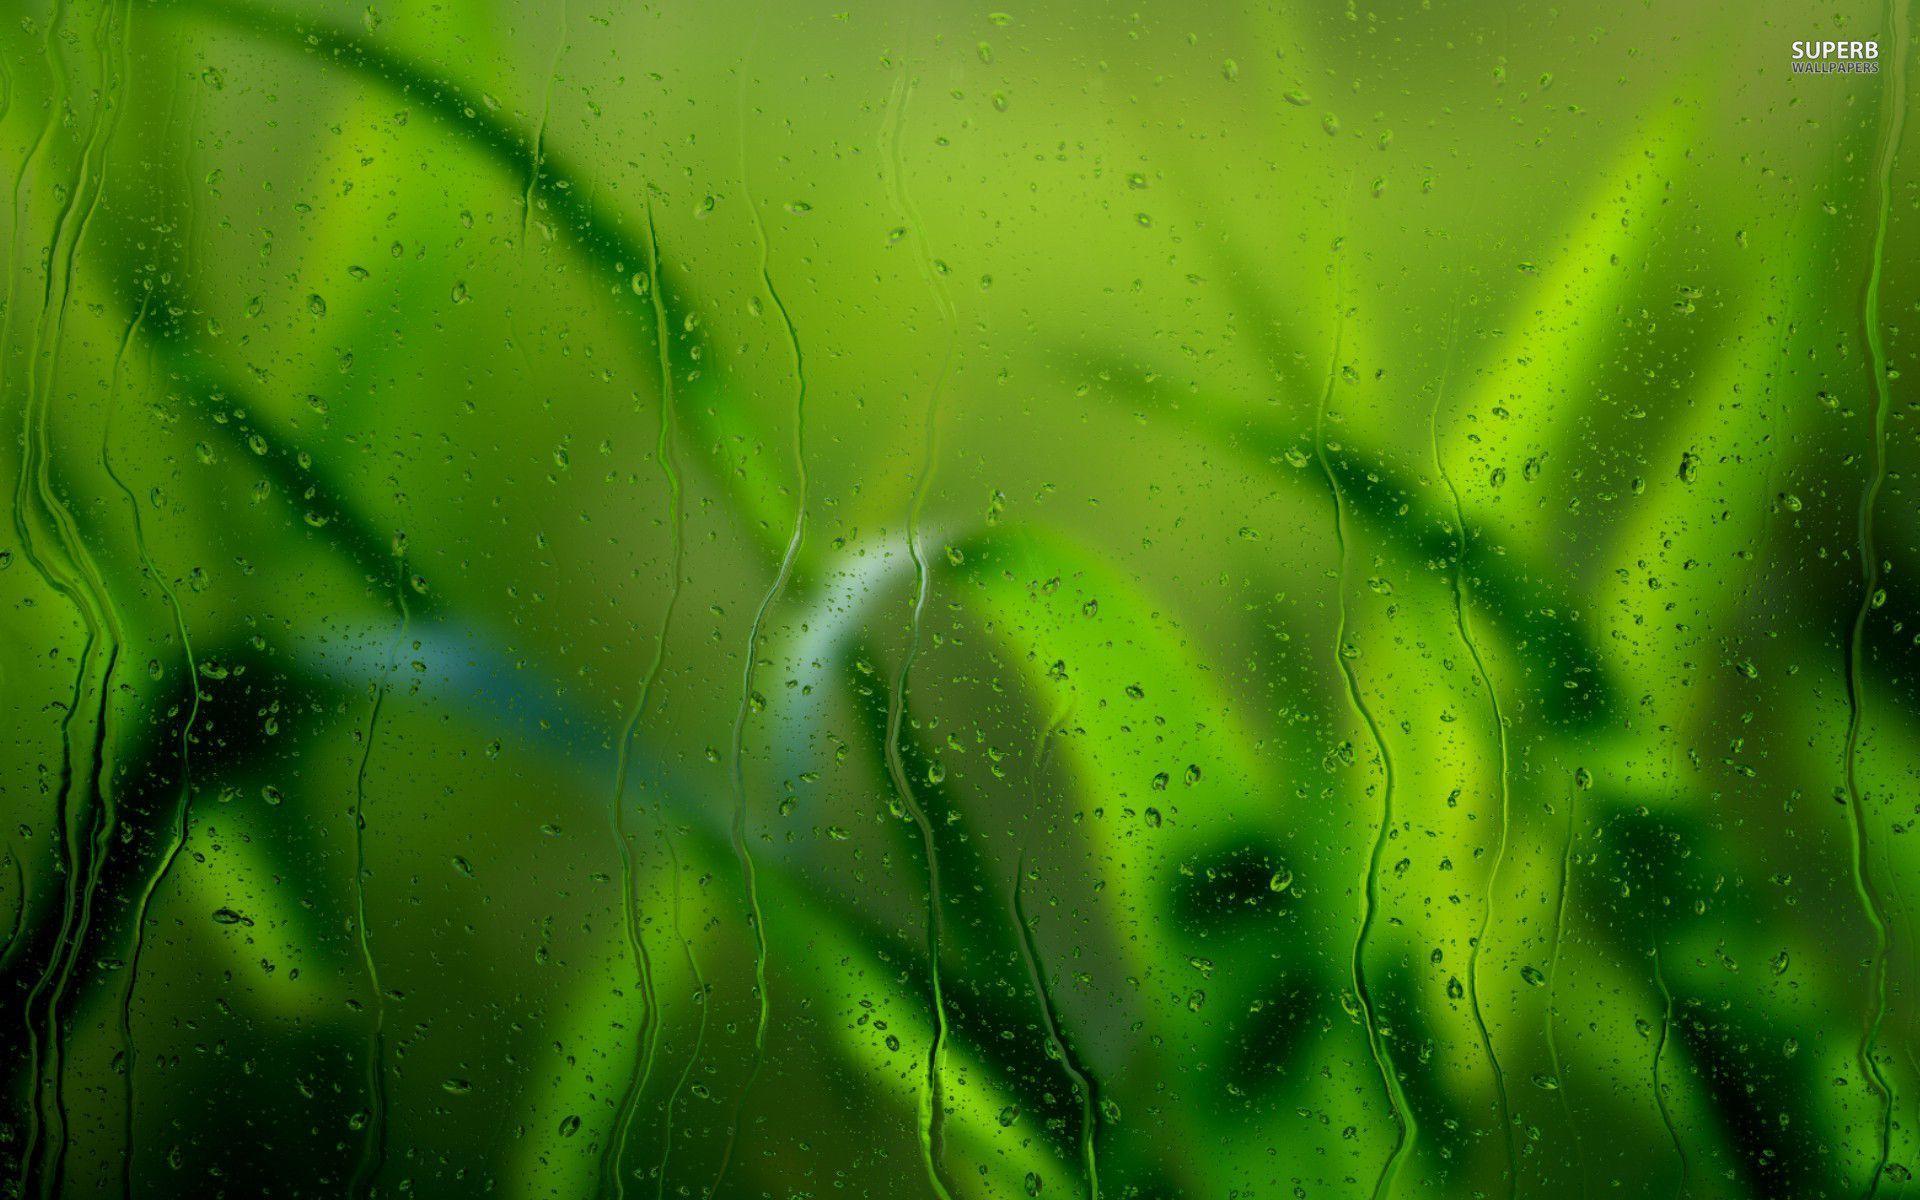 Grass behind rainy window, Desktop and mobile wallpaper